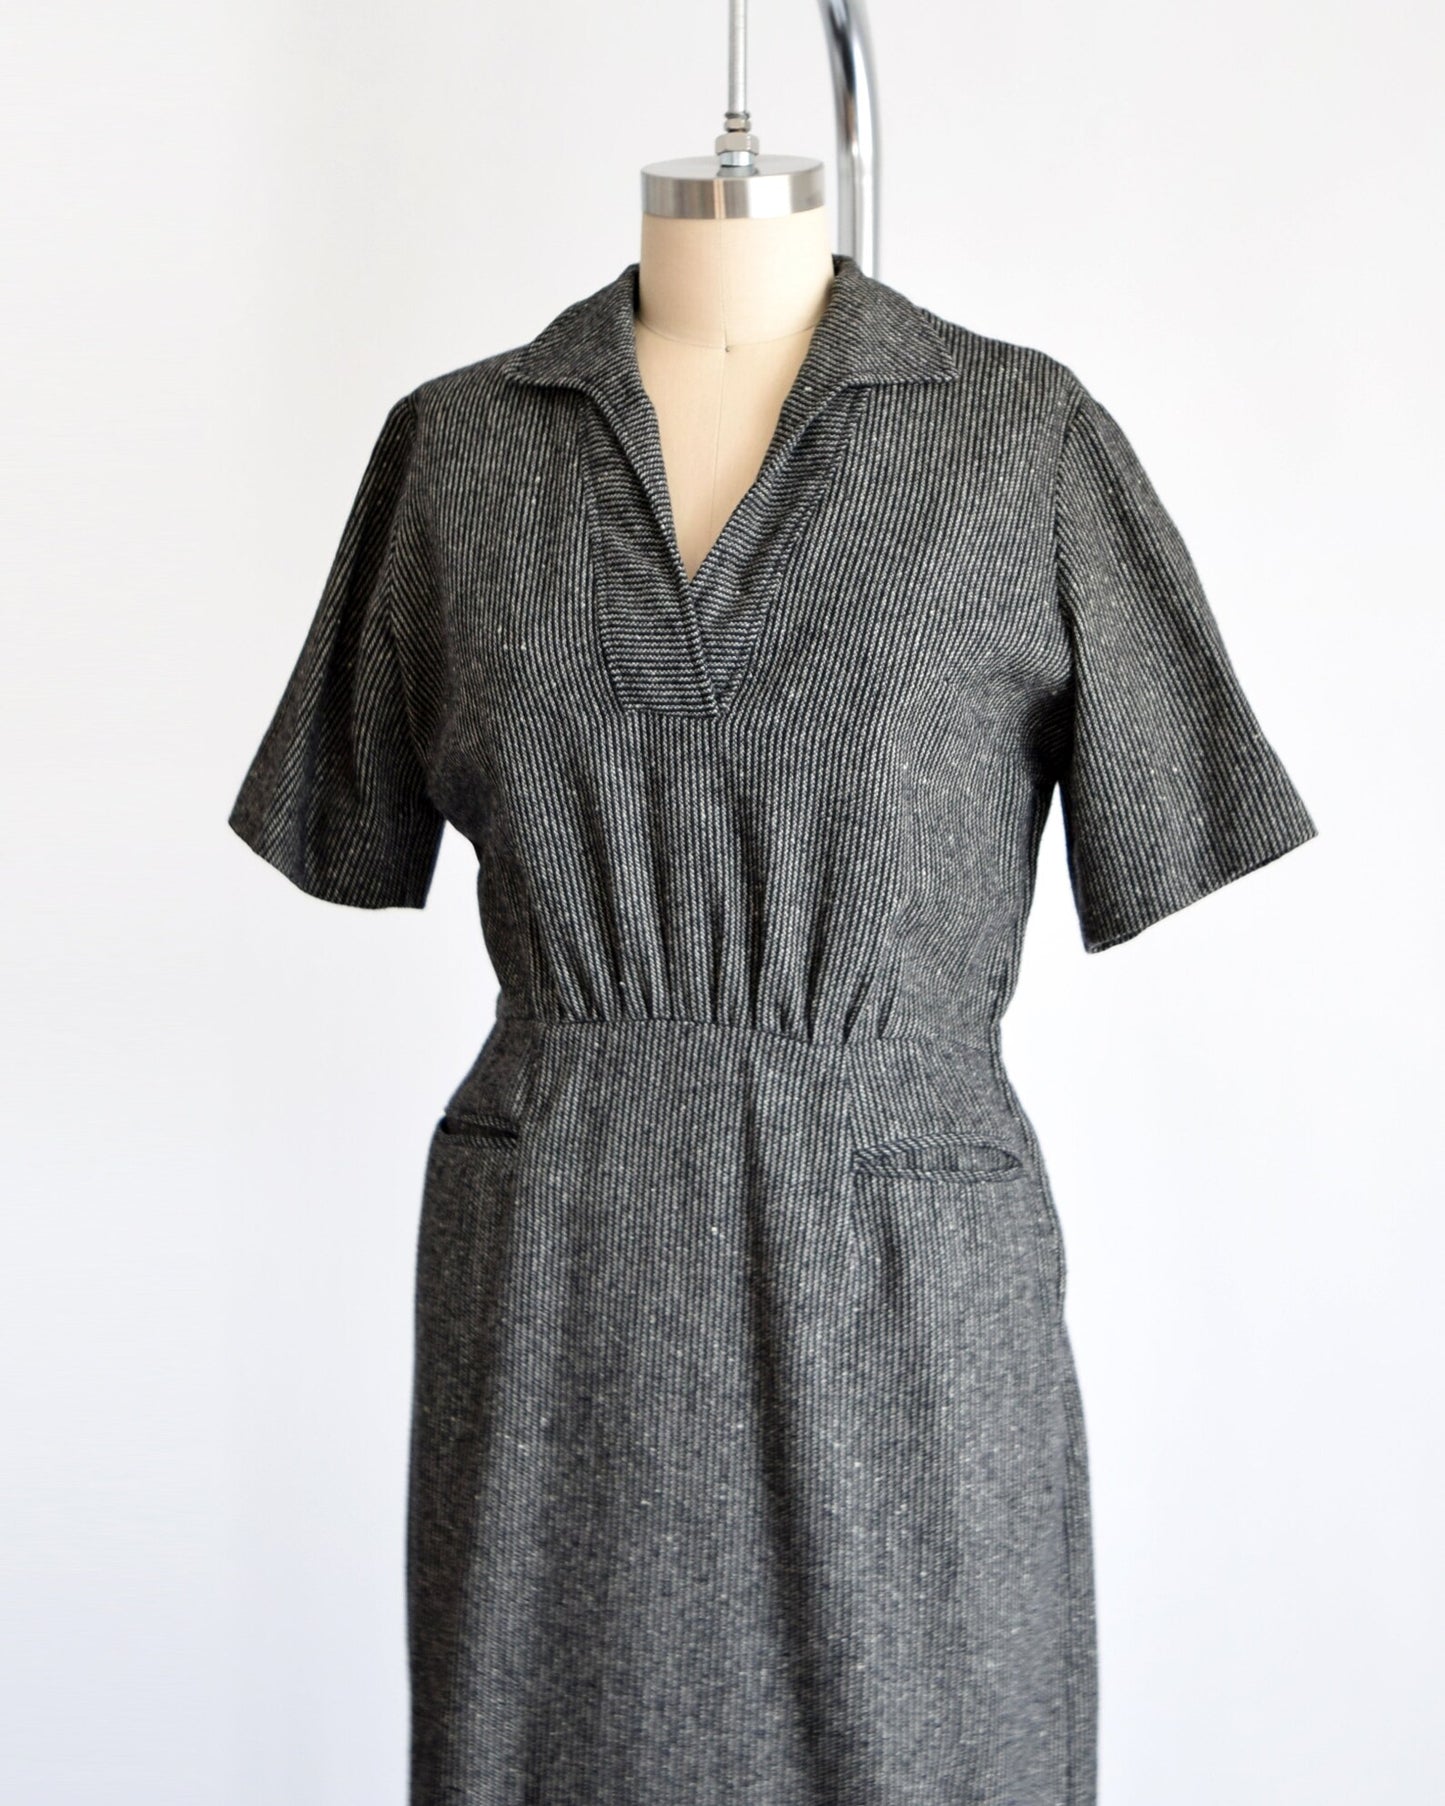 Vintage 1950s Striped Black & White Wool Dress | large